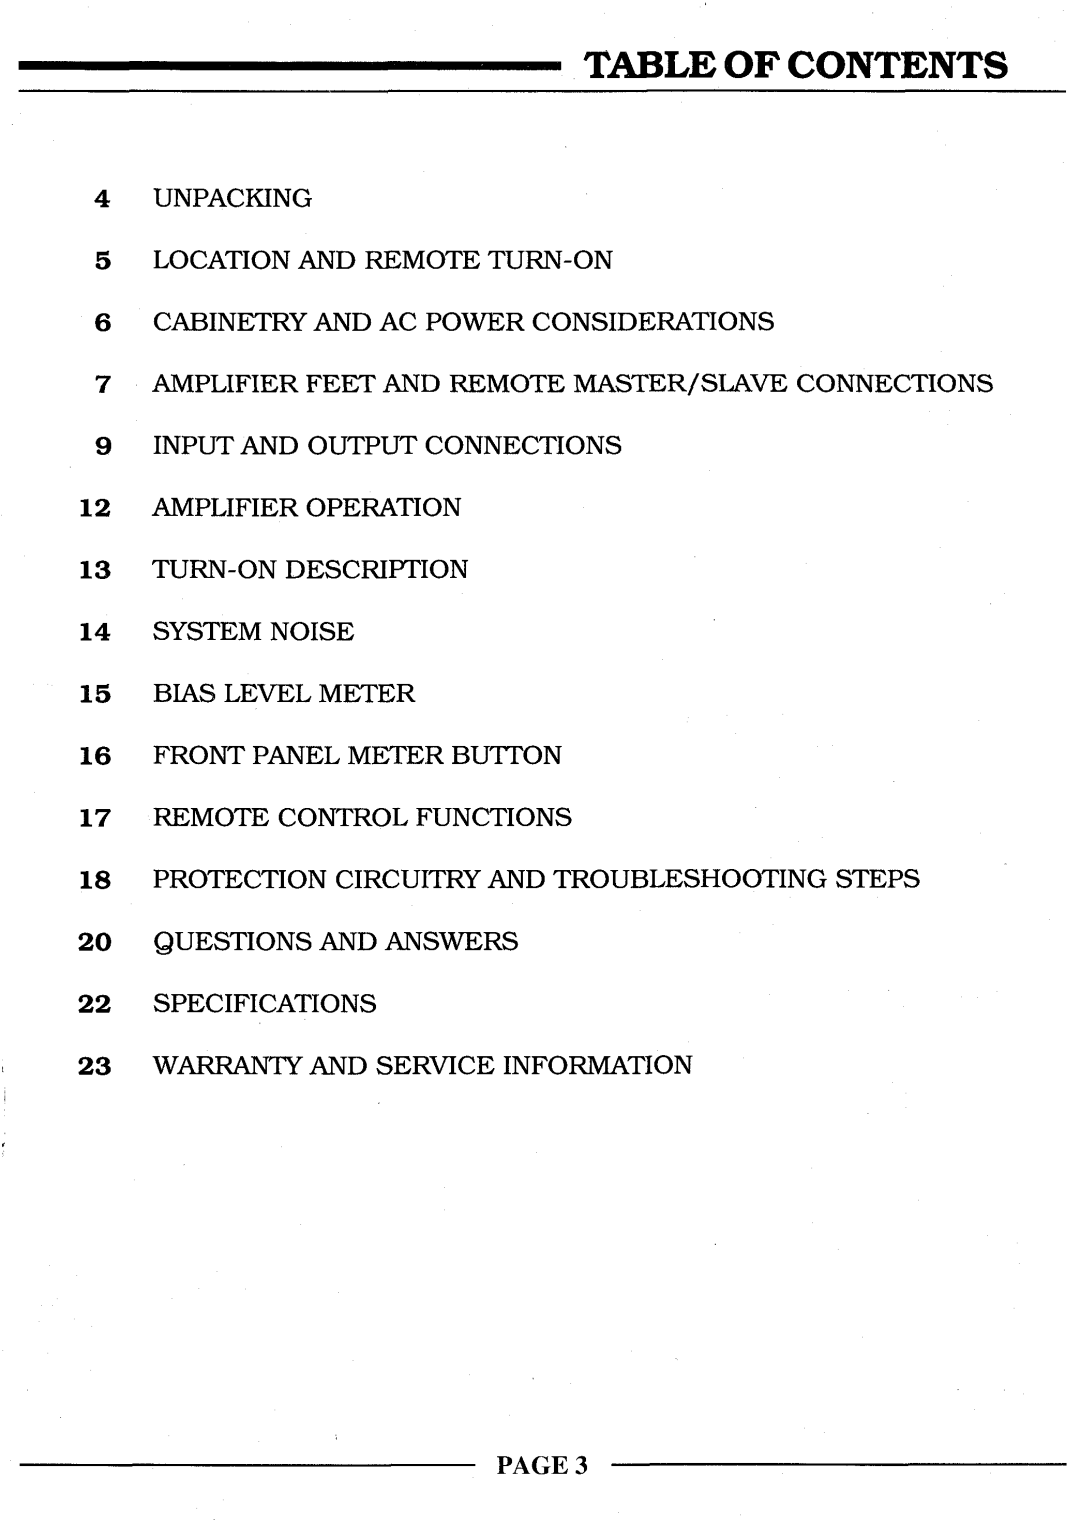 Krell Industries KSA-200S, KSA-300S, KSA-100S manual Table Of Contents, Page 